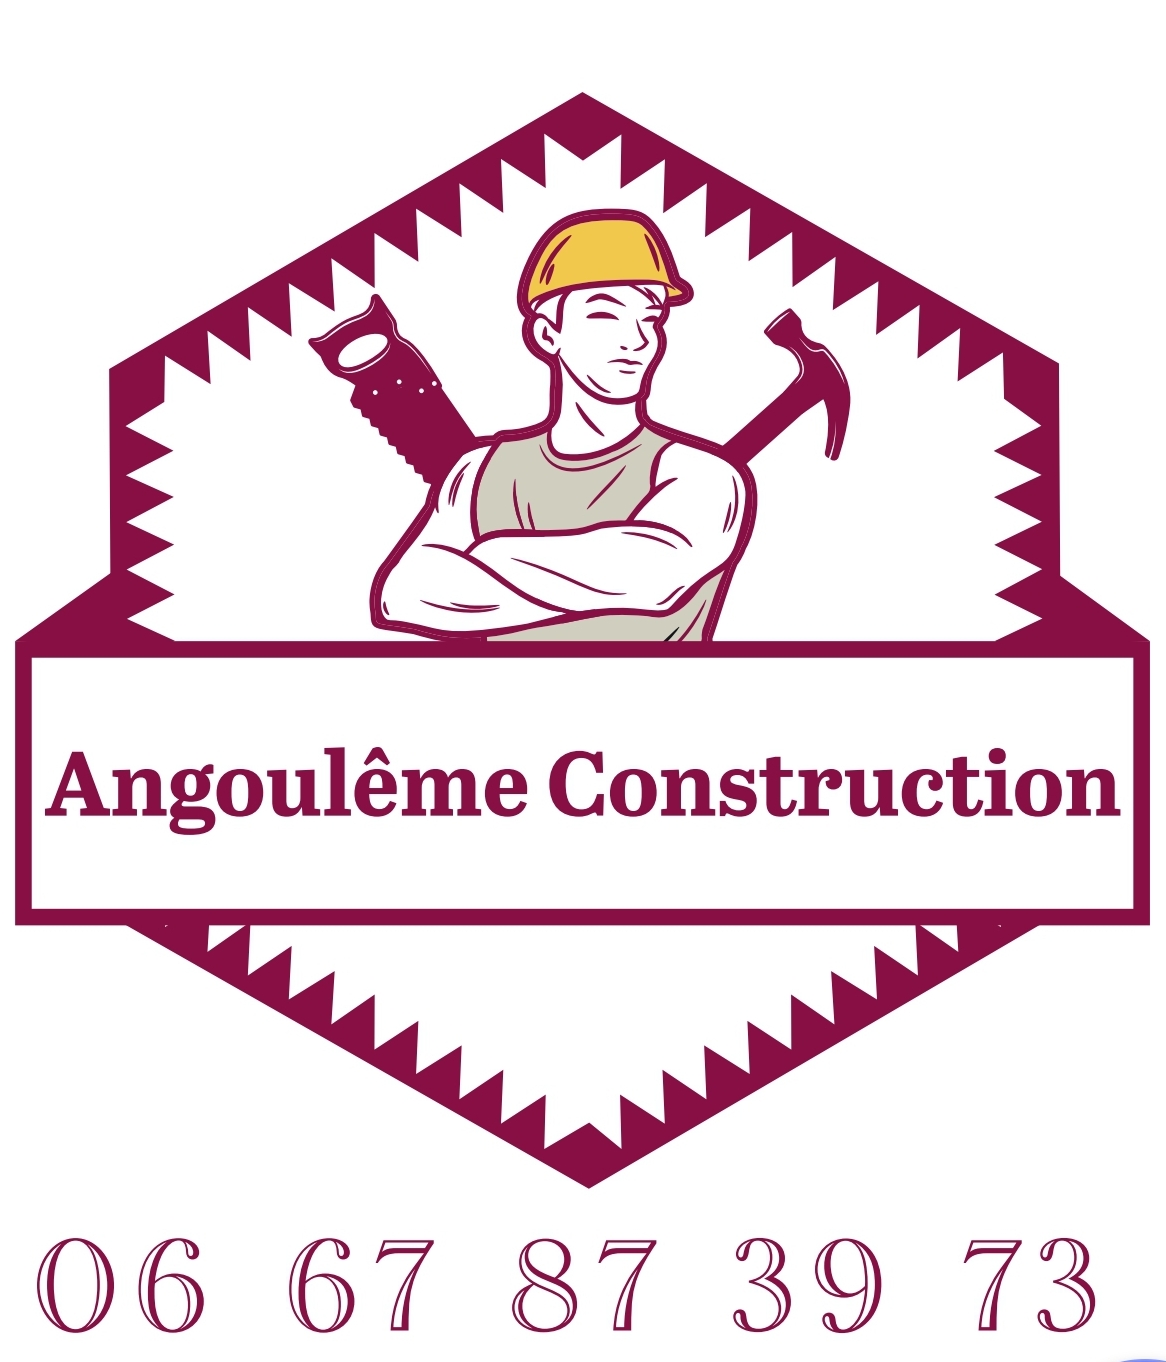 Angoulême Construction